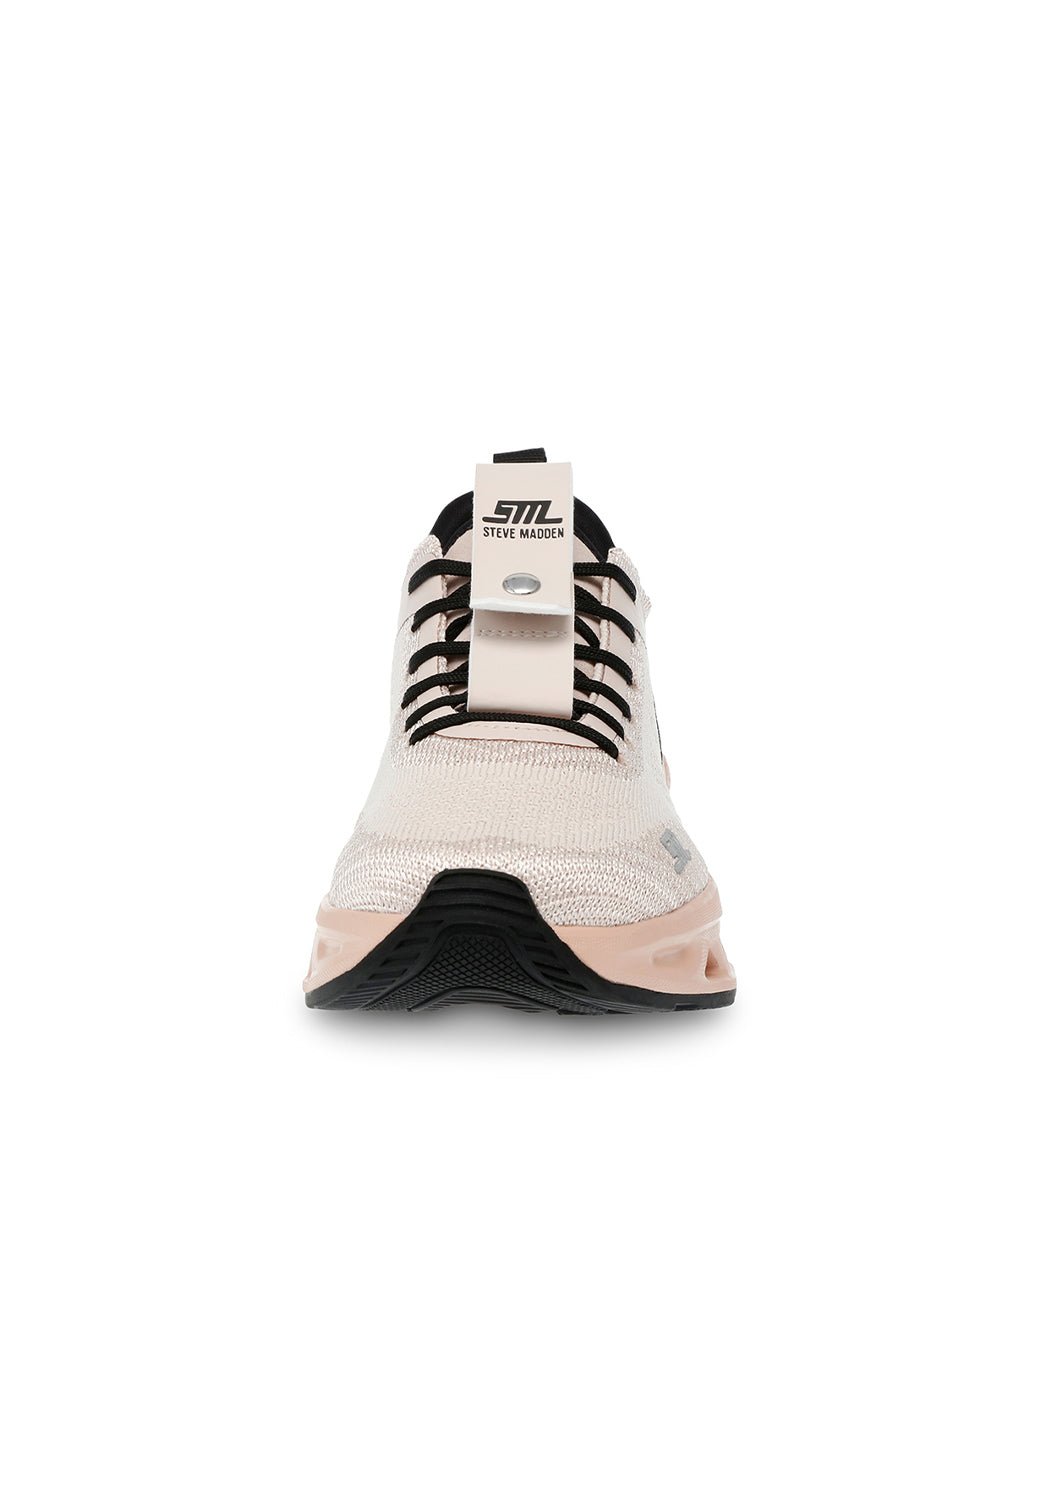 נעלי ריצה Surge נשים - Steve Madden